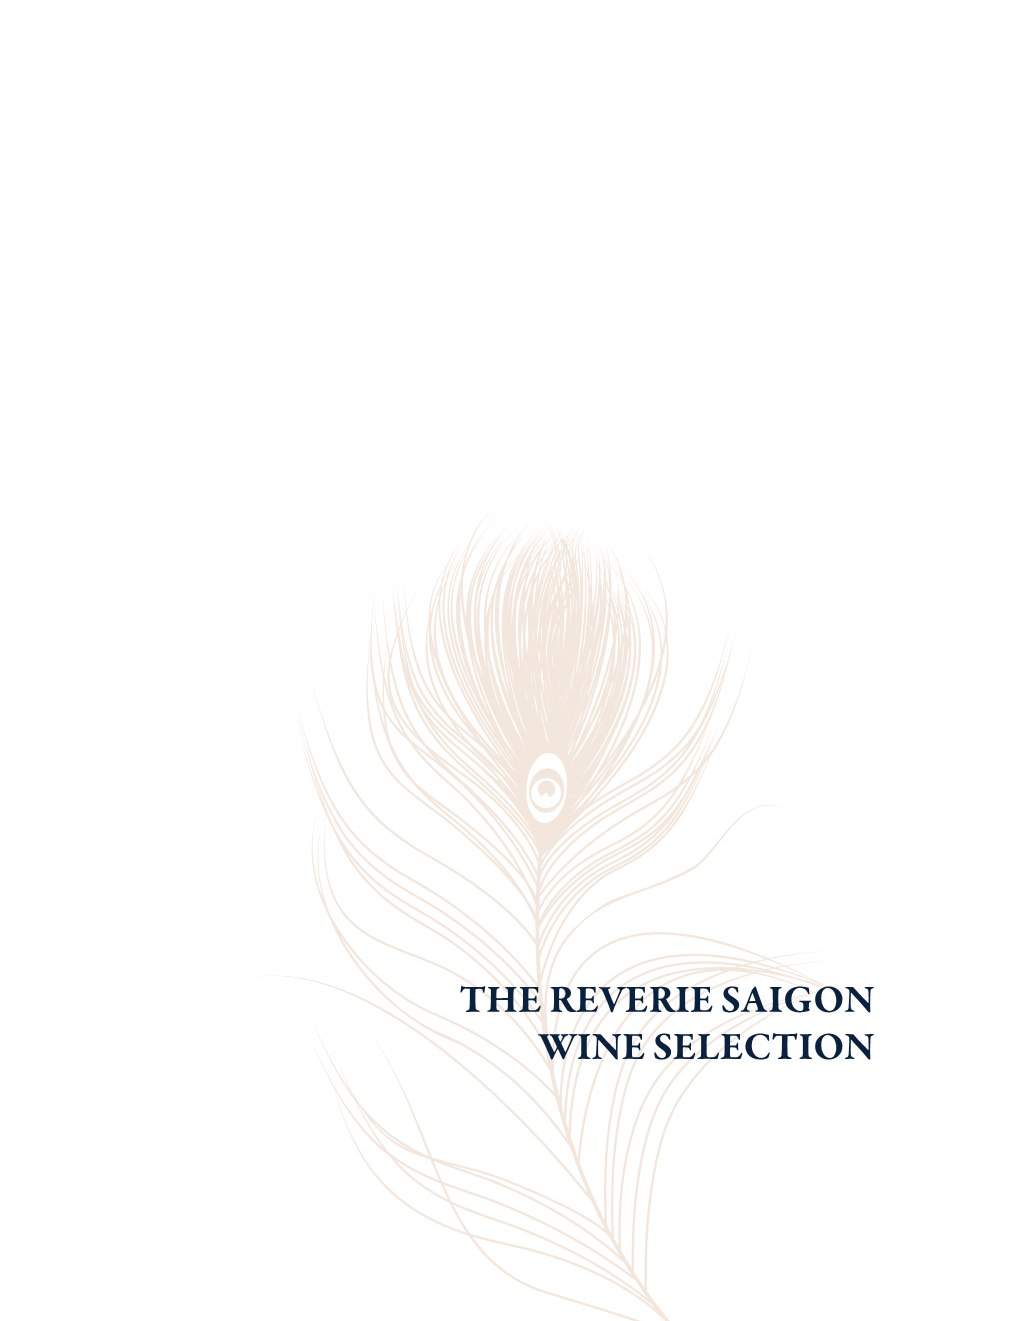 The Reverie Saigon Wine Selection Wine List Index